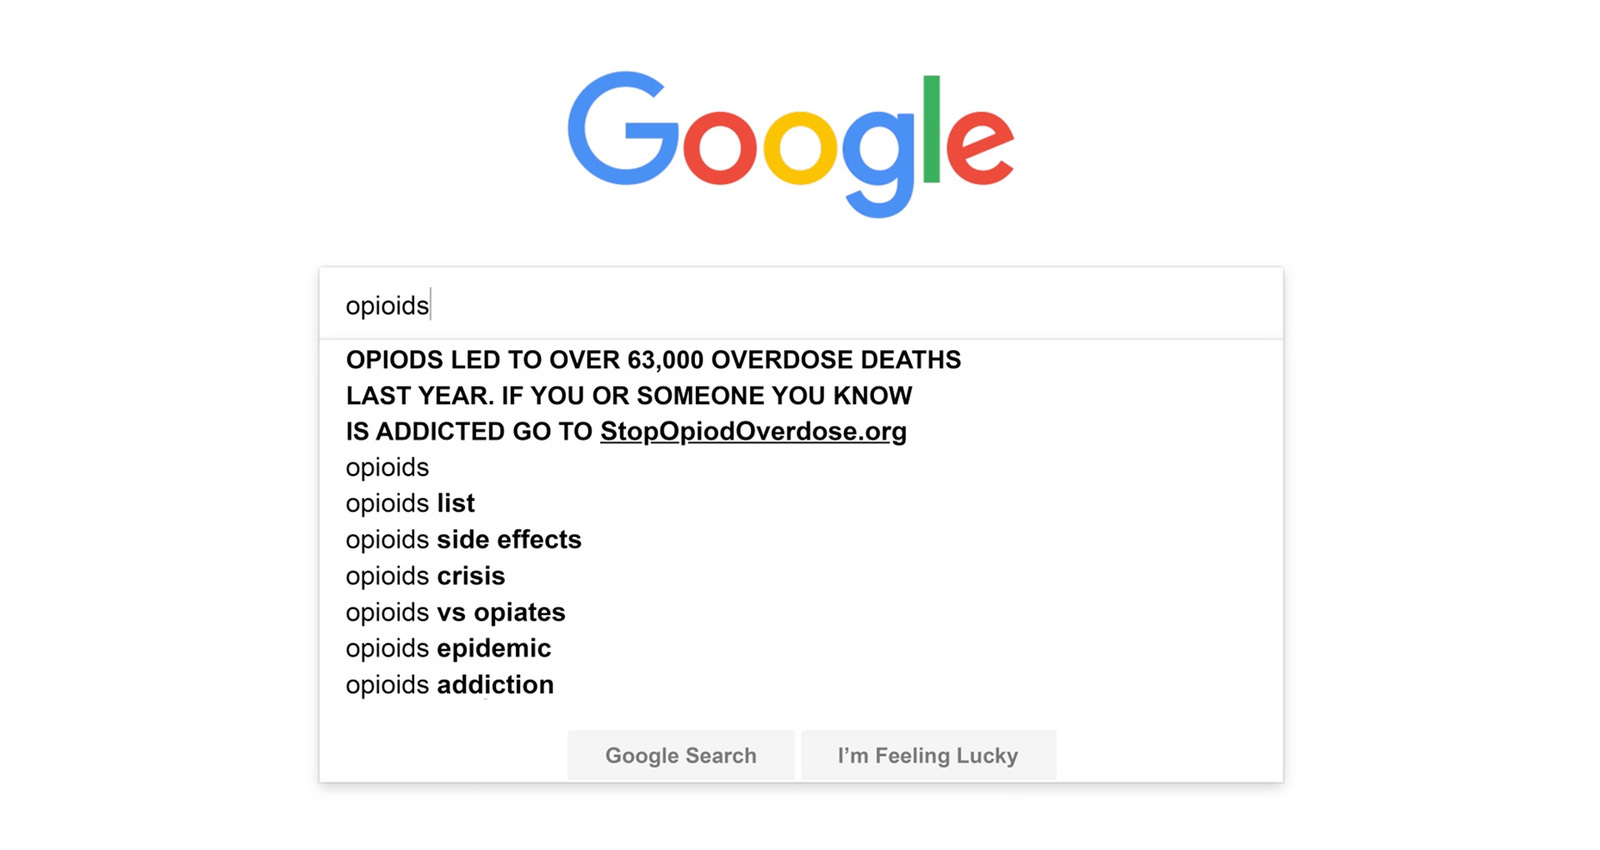 Google Search 